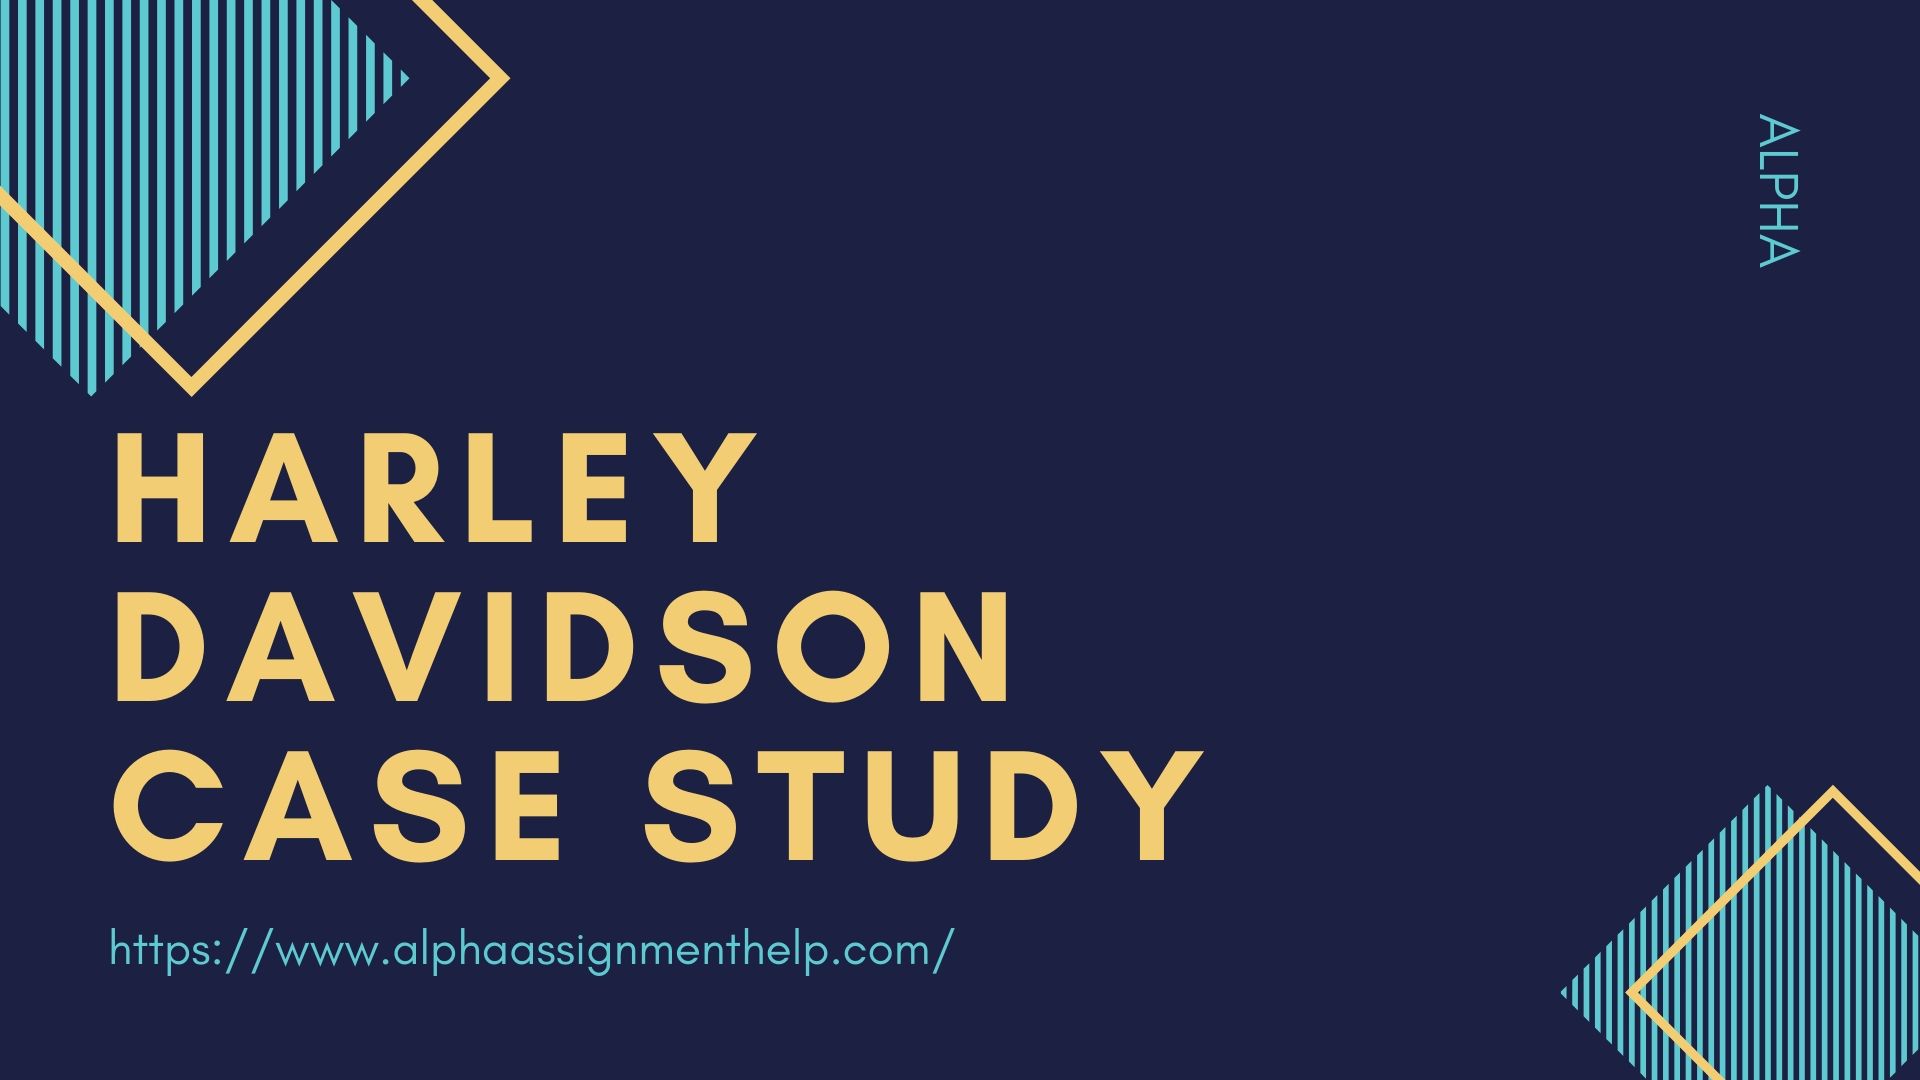 Harley Davidson case study